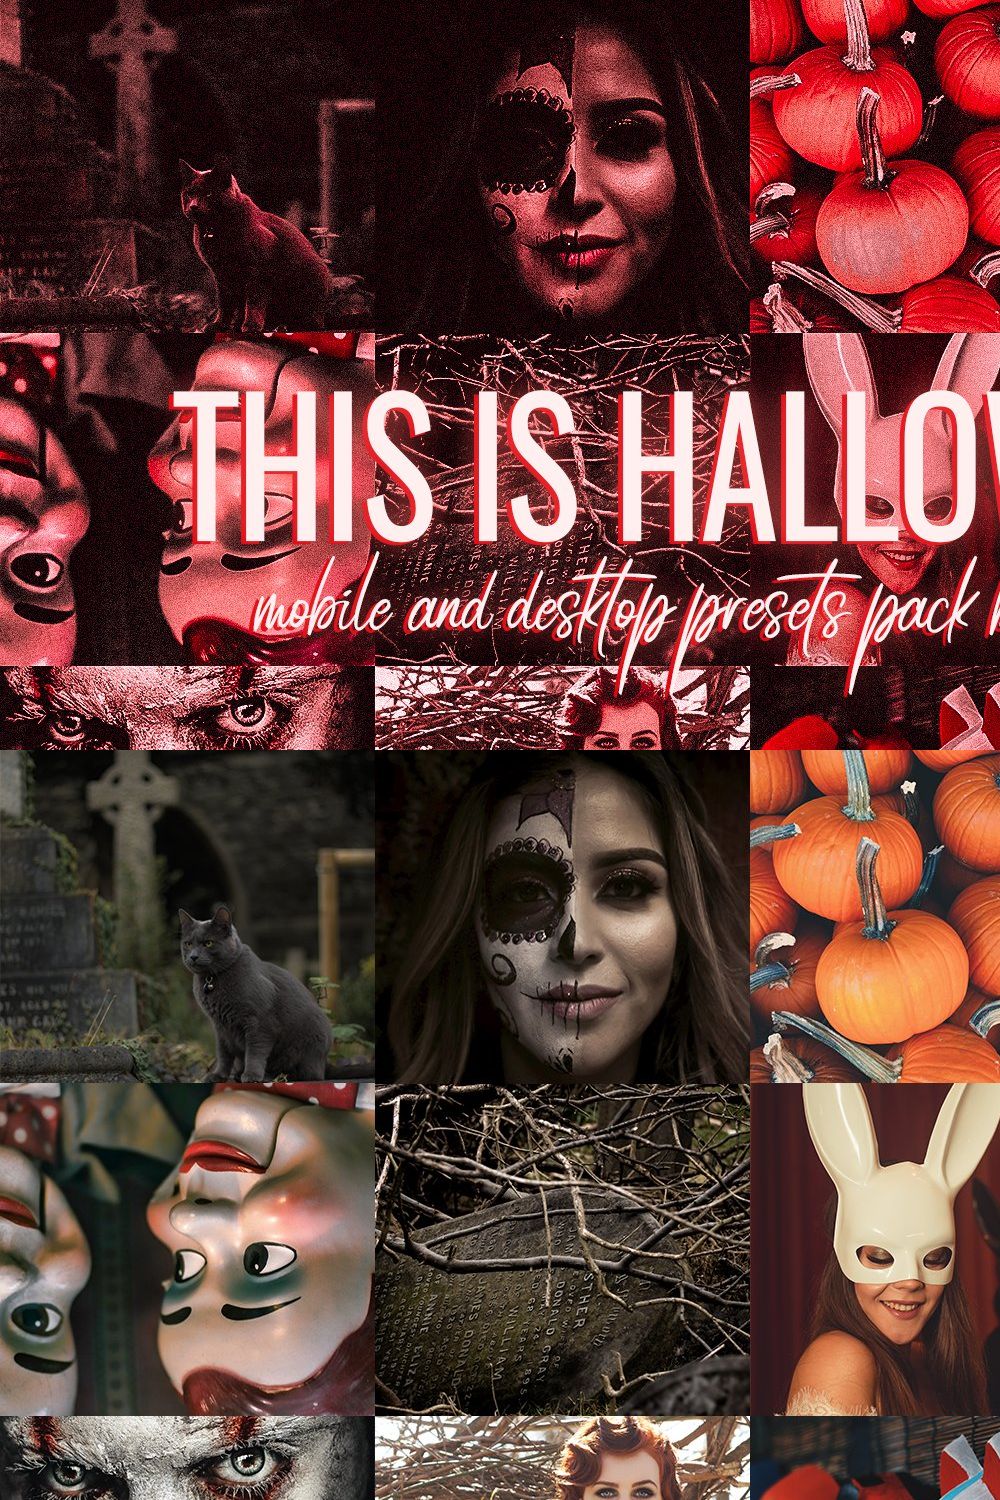 Halloween Lightroom presets pinterest preview image.